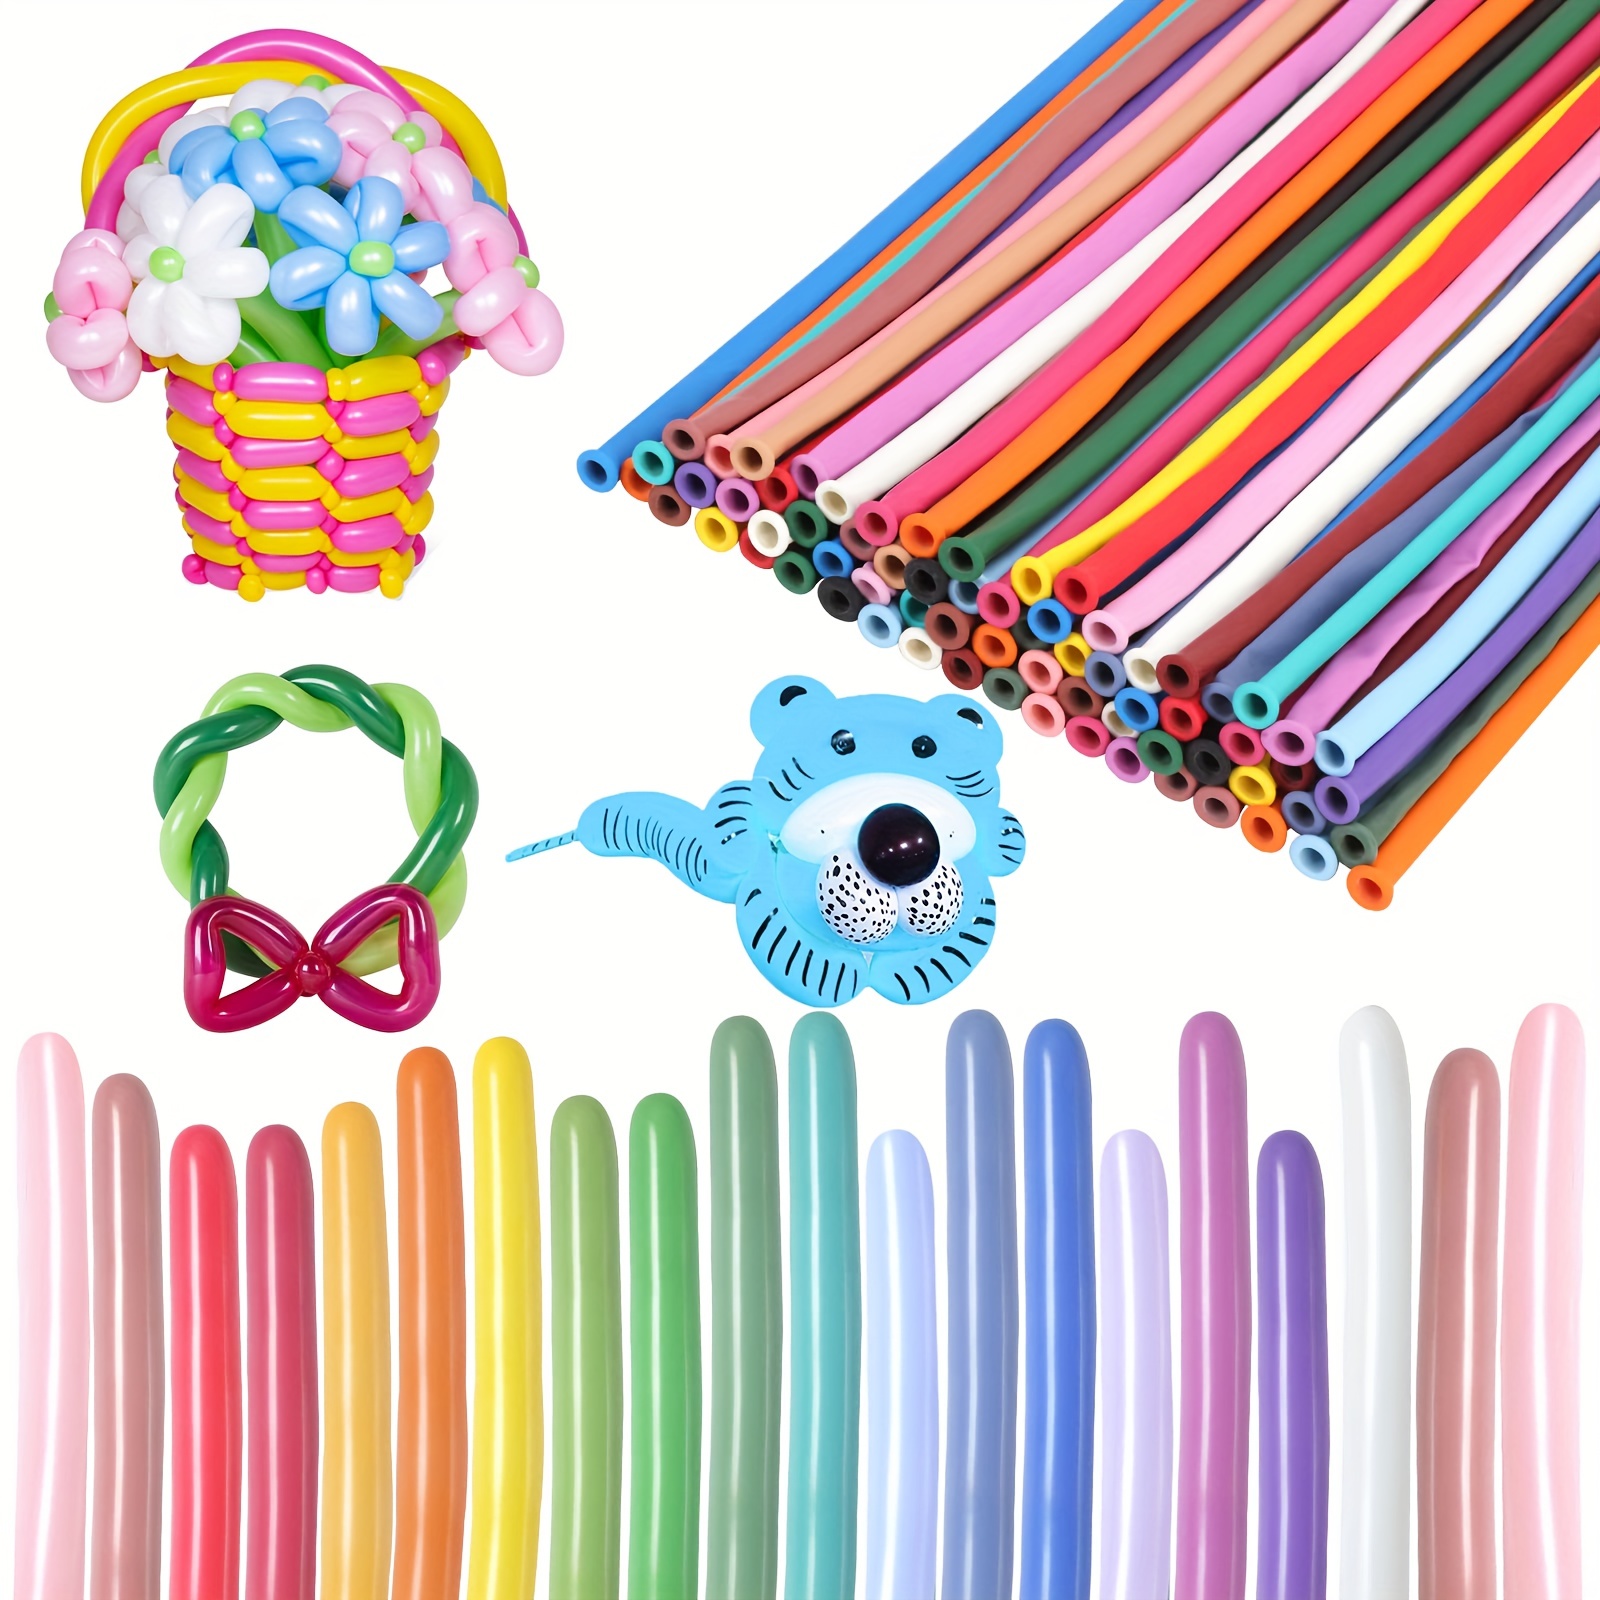 Party Balloon Animal Party Supplies Kit 